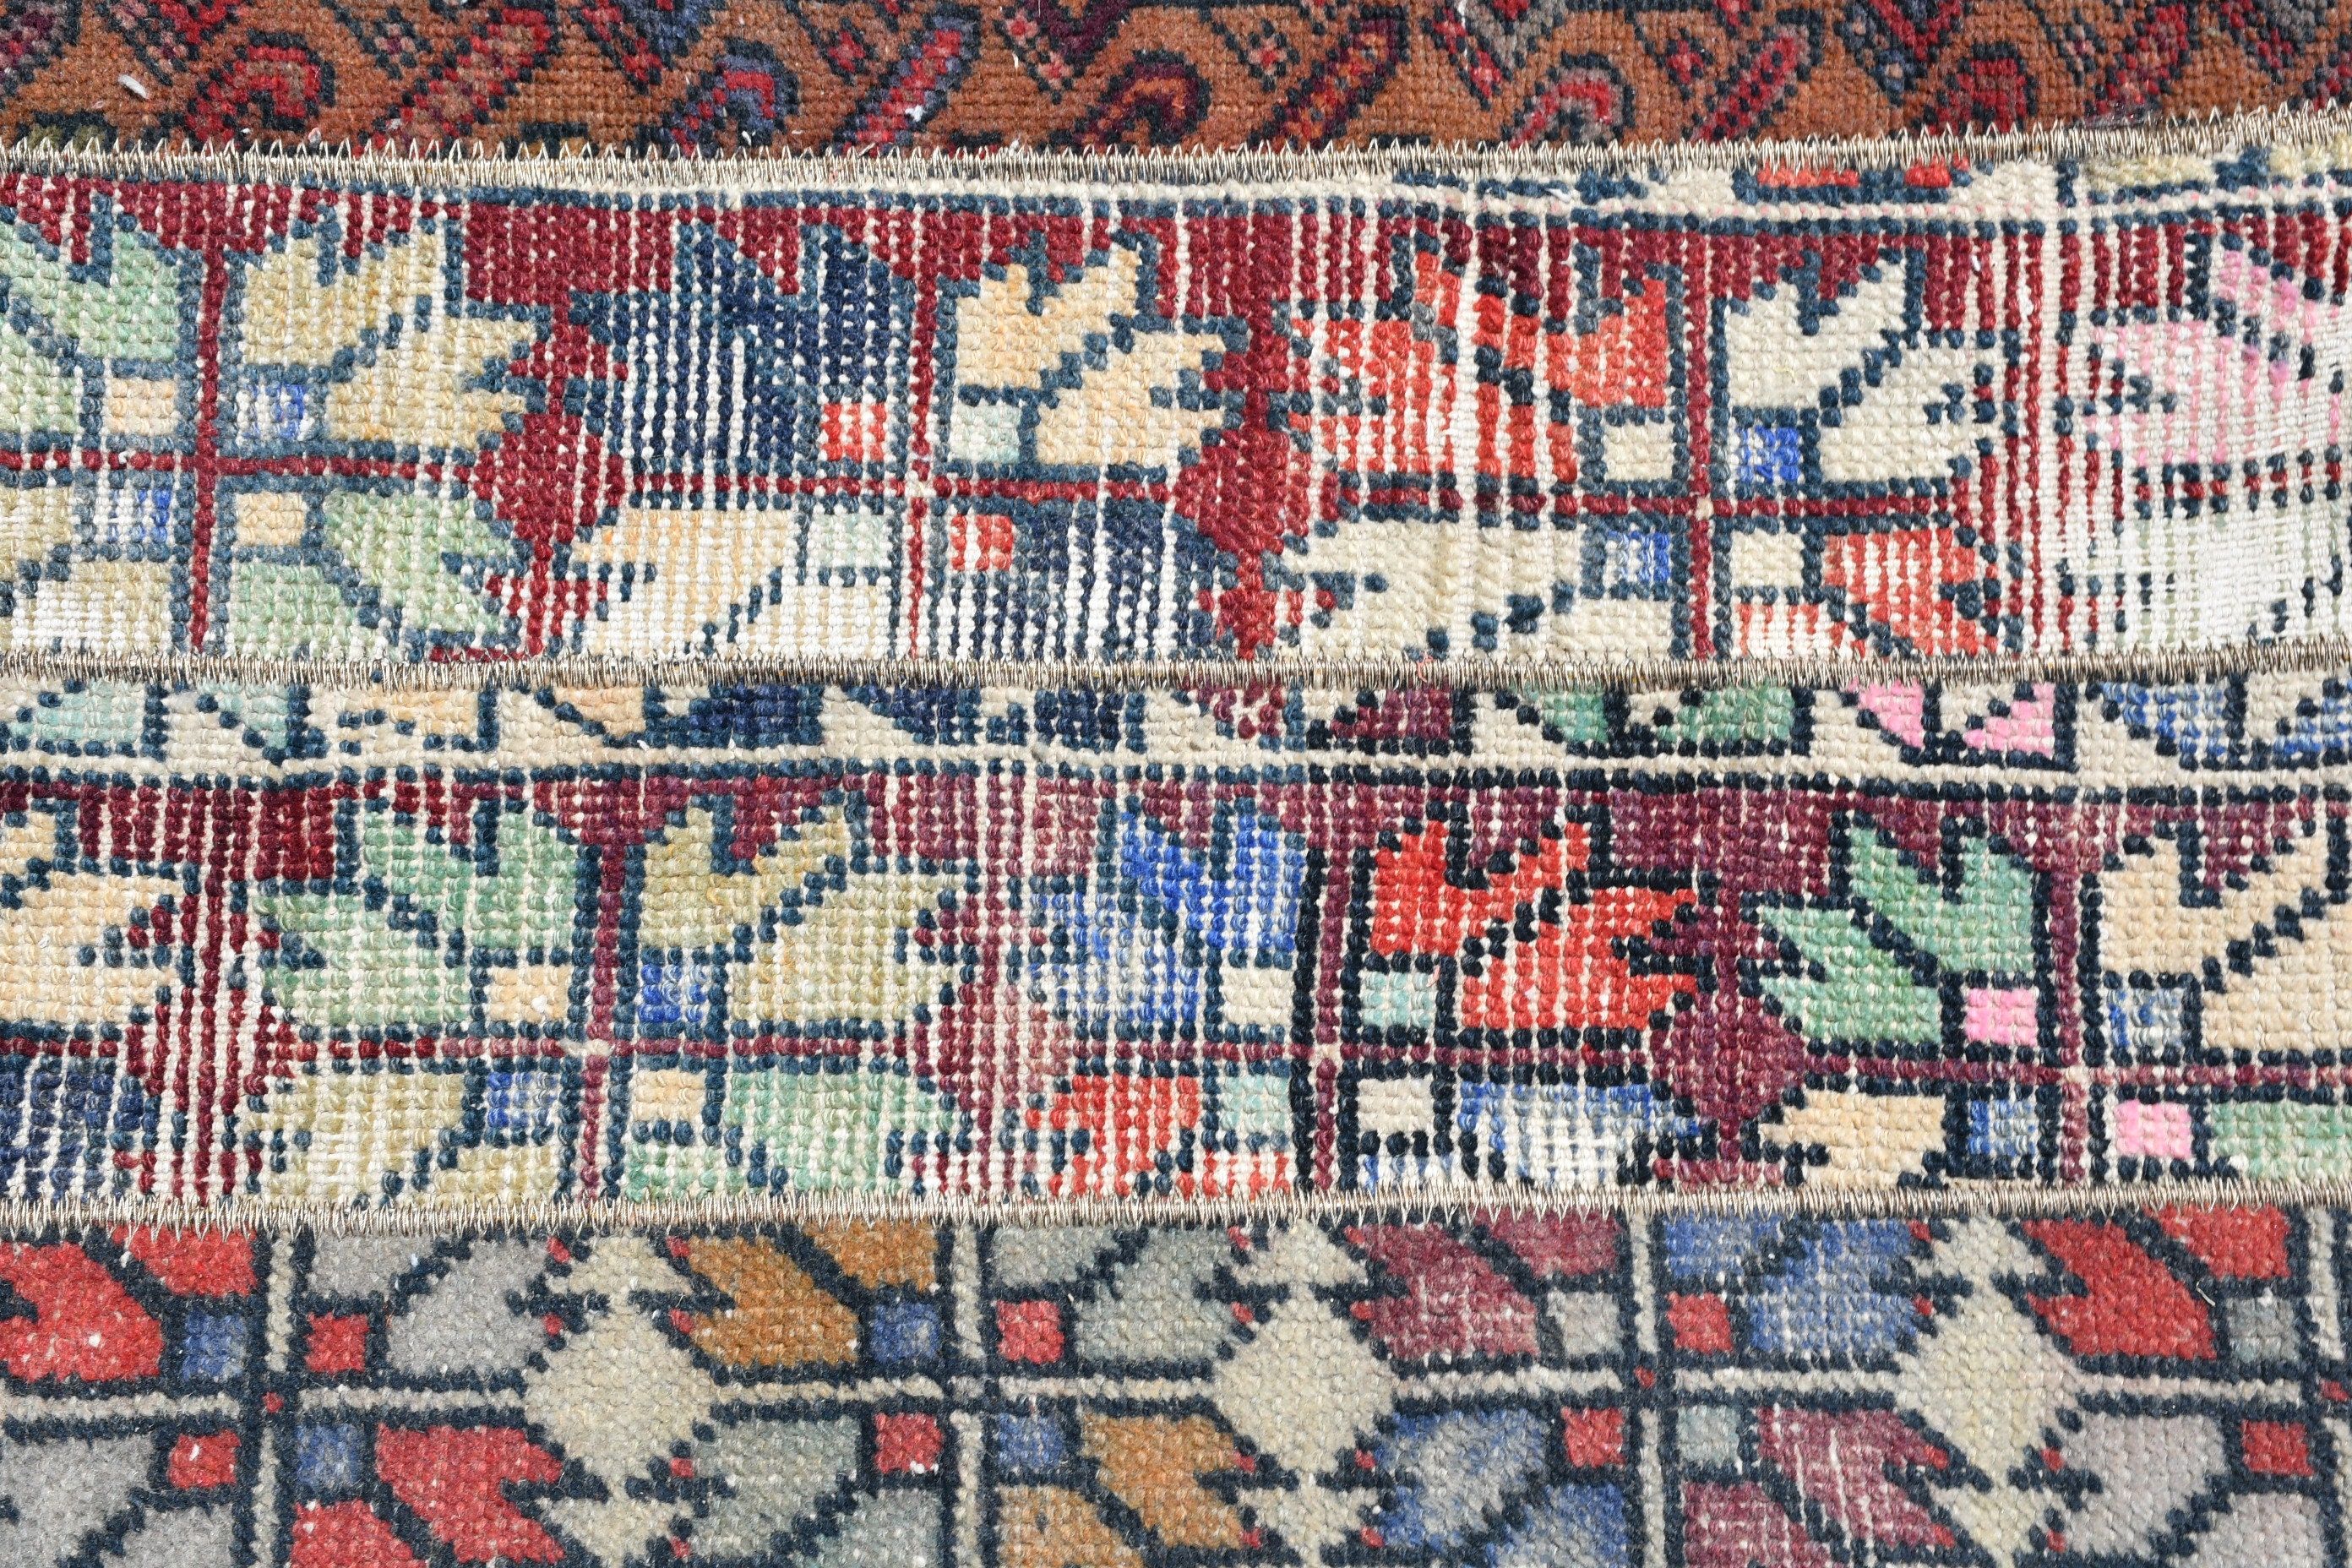 Abstract Rug, Pink Anatolian Rug, Stair Rug, Vintage Rugs, Home Decor Rug, Turkish Rugs, Hallway Rug, Moroccan Rugs, 1.9x5.7 ft Runner Rug